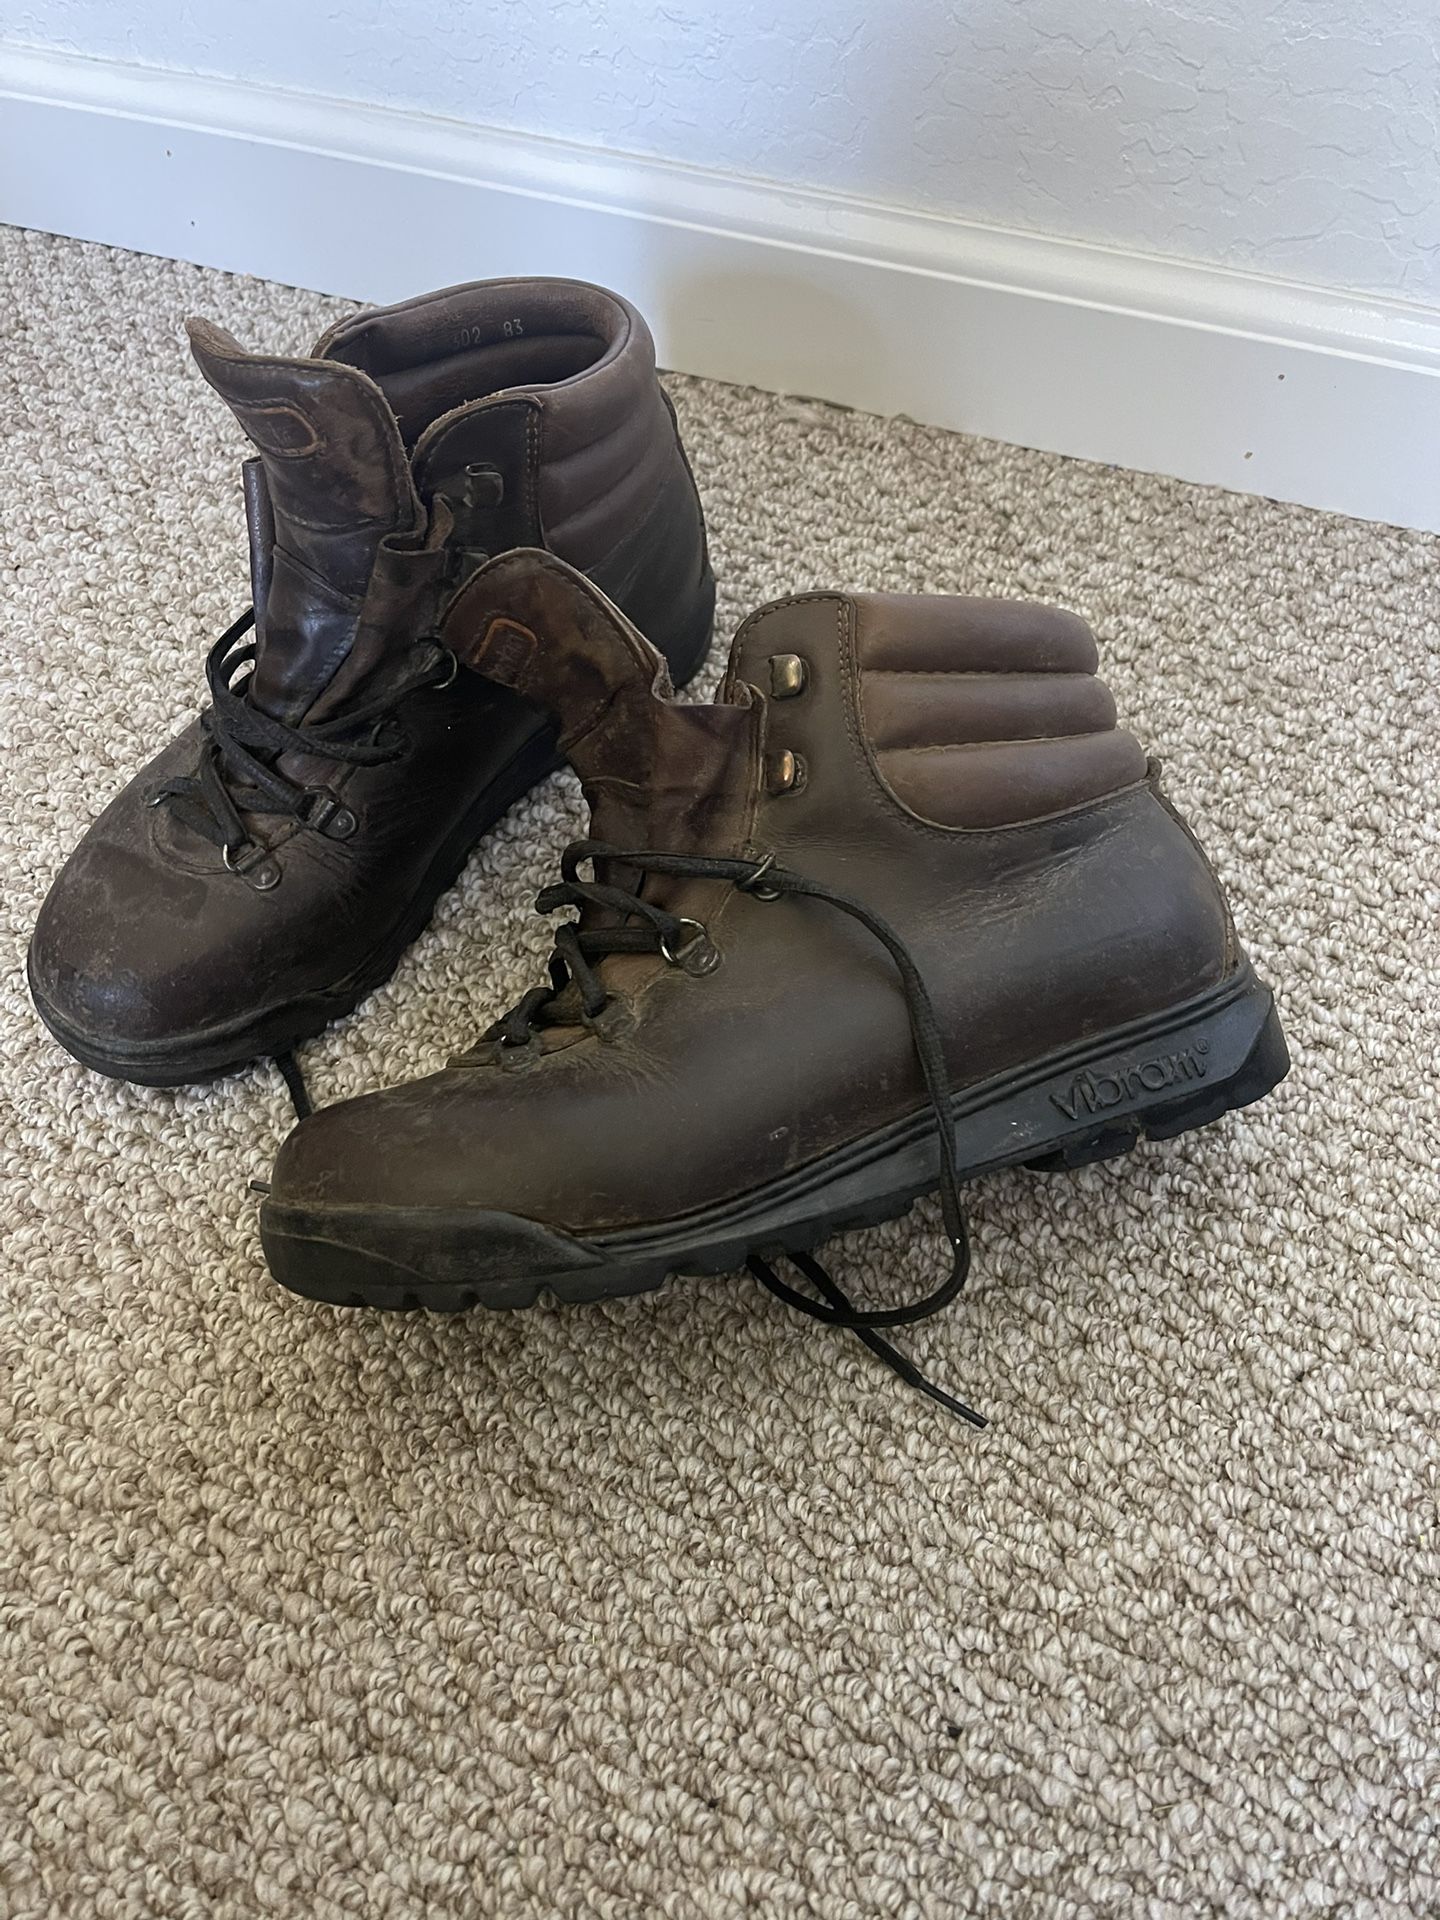 Zamberlan Men’s Hiking And Hunting Boots Size 7